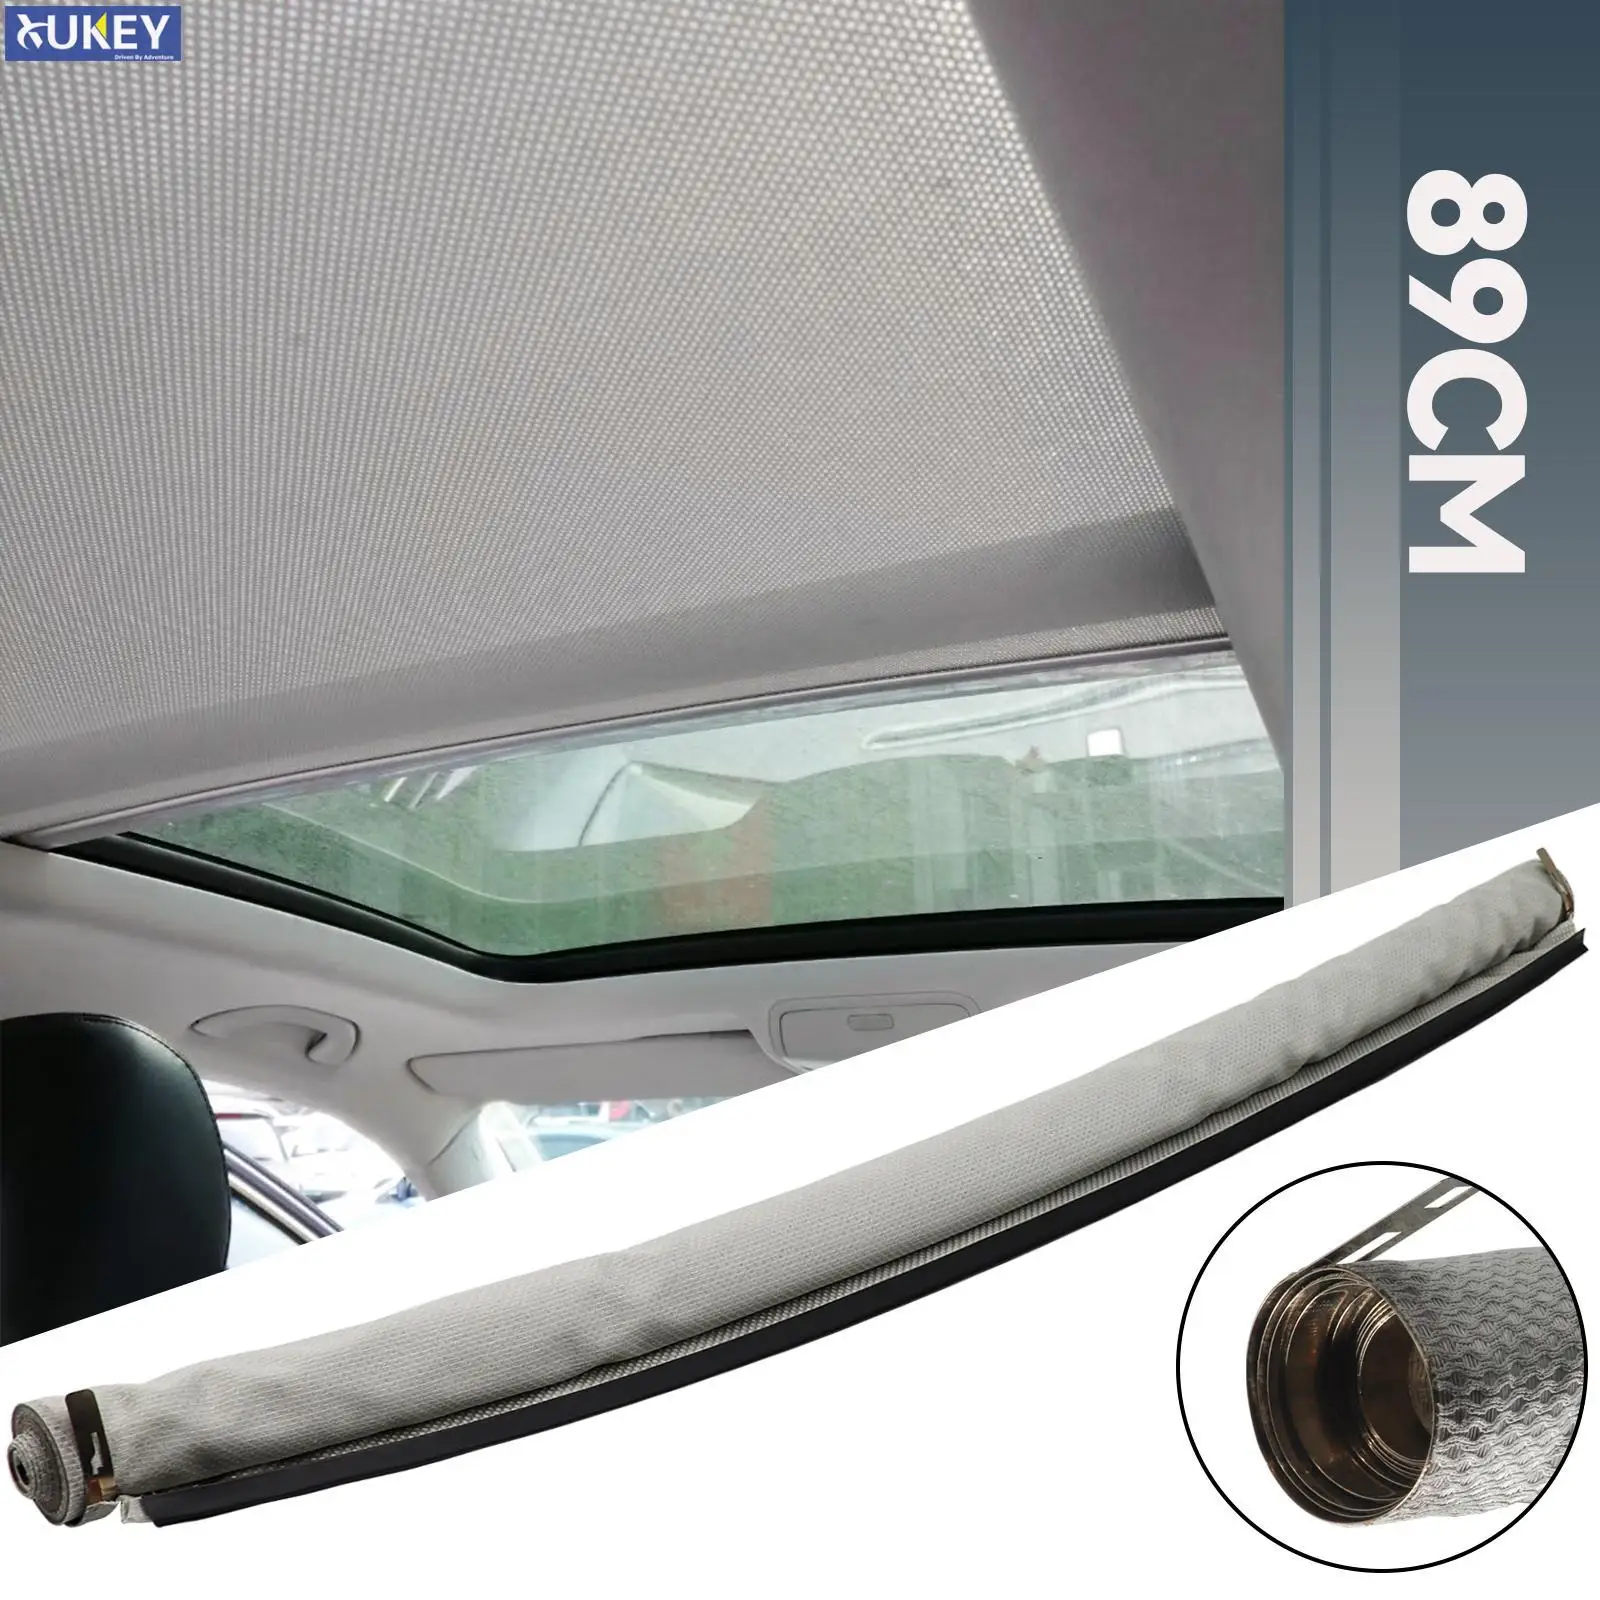 

Curtain Skylight shutter Sunroof Sunshade For Volkswagen VW CC Passat CC 2009-2017 3C8877307A 3C8877307B 3C8877307C 3C8877307D